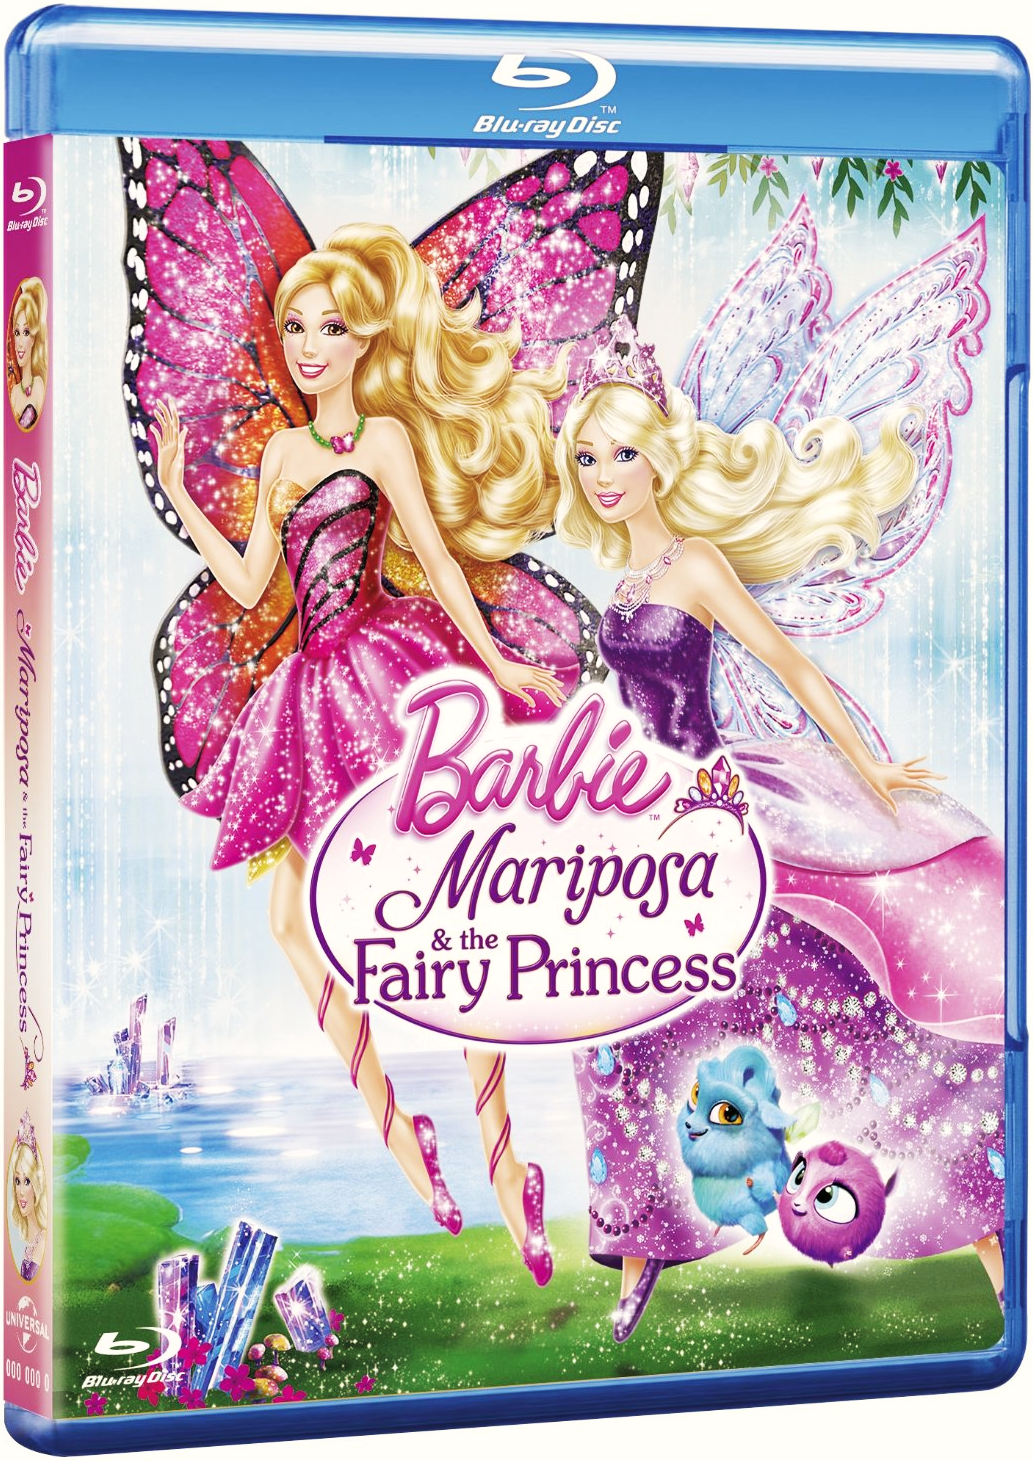 Barbie fashion fairytale full movie download - analyticsaceto